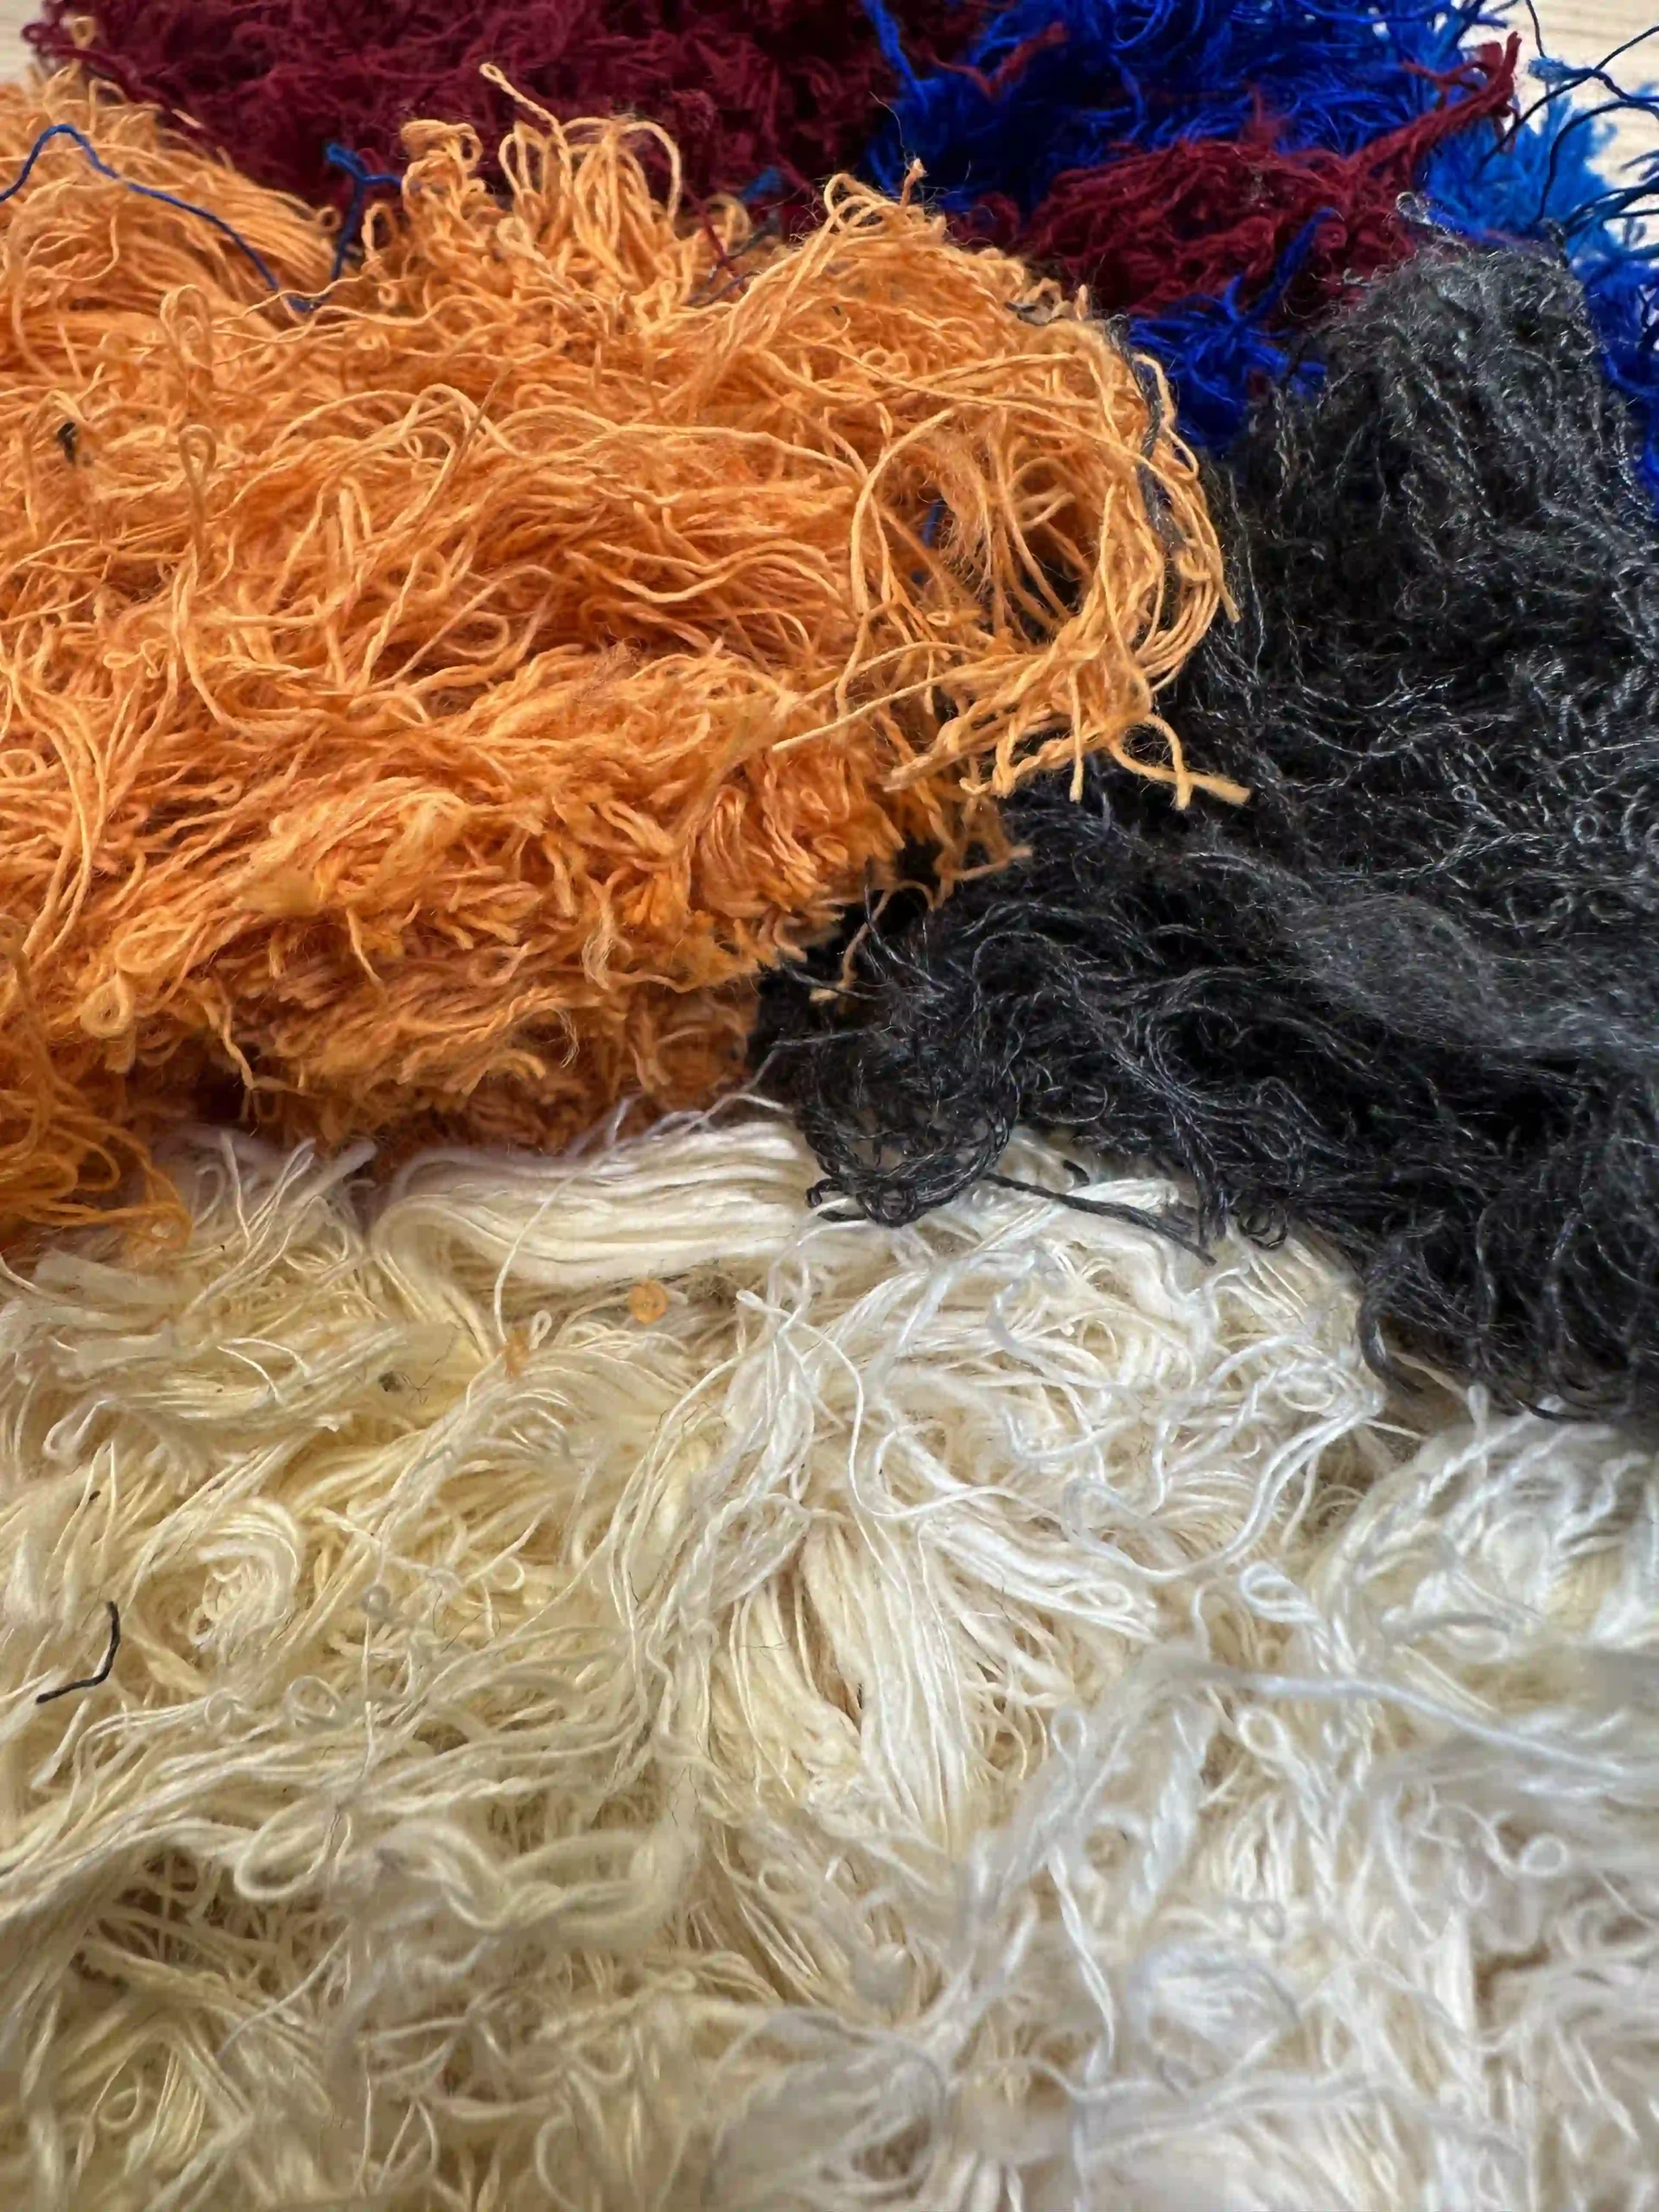 Acrylic Yarn Waste (Fabric) - WasteBase